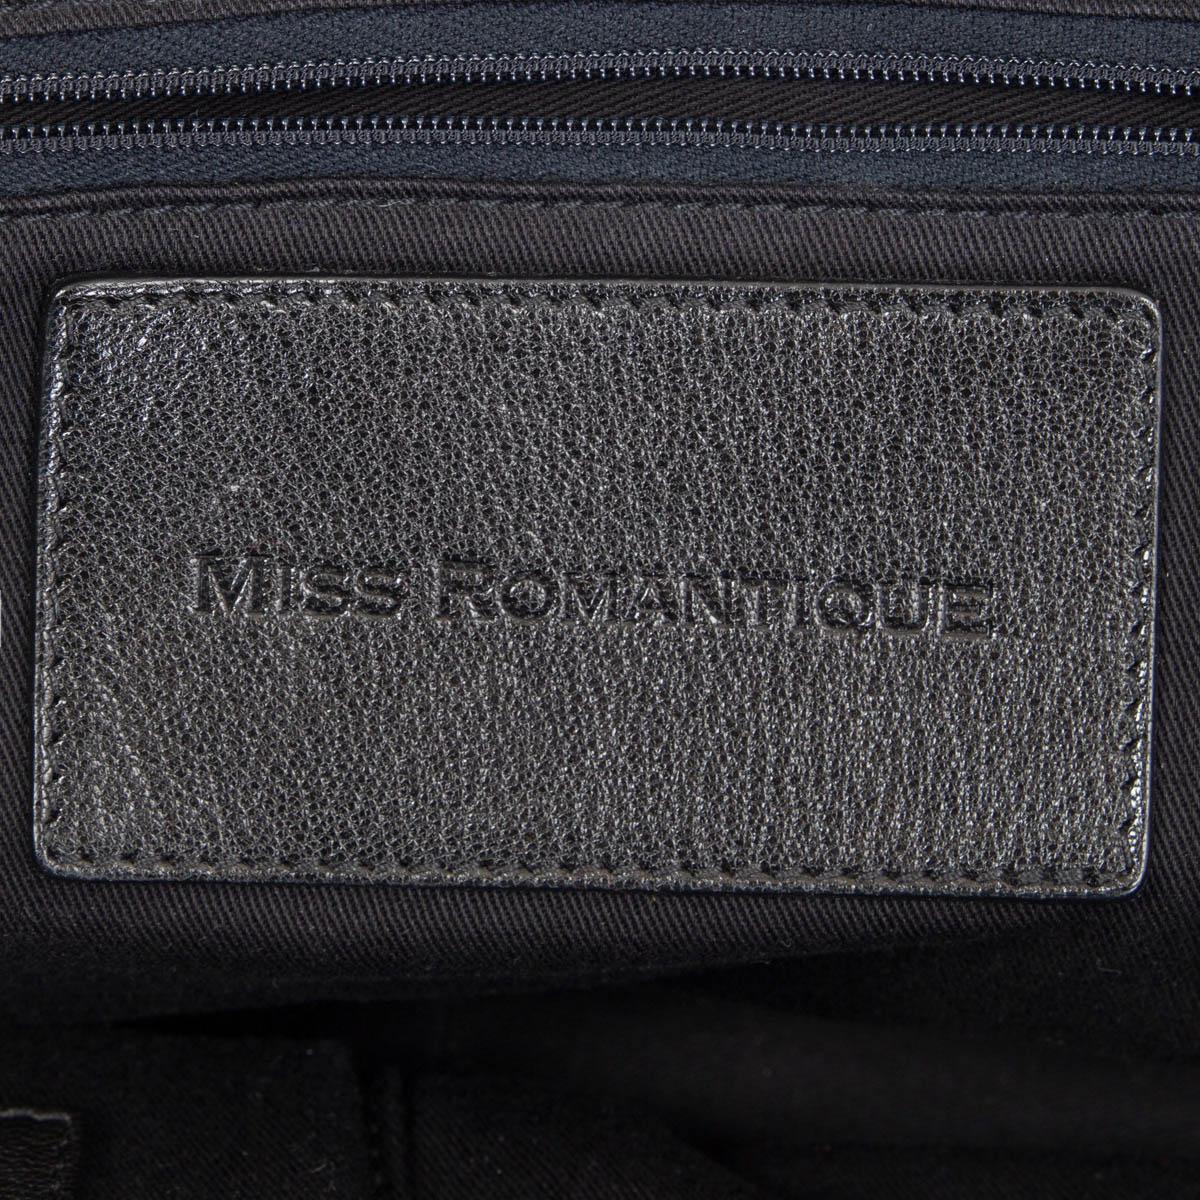 DOLCE & GABBANA black leather MISS ROMANTIQUE Shoulder Bag In Excellent Condition For Sale In Zürich, CH